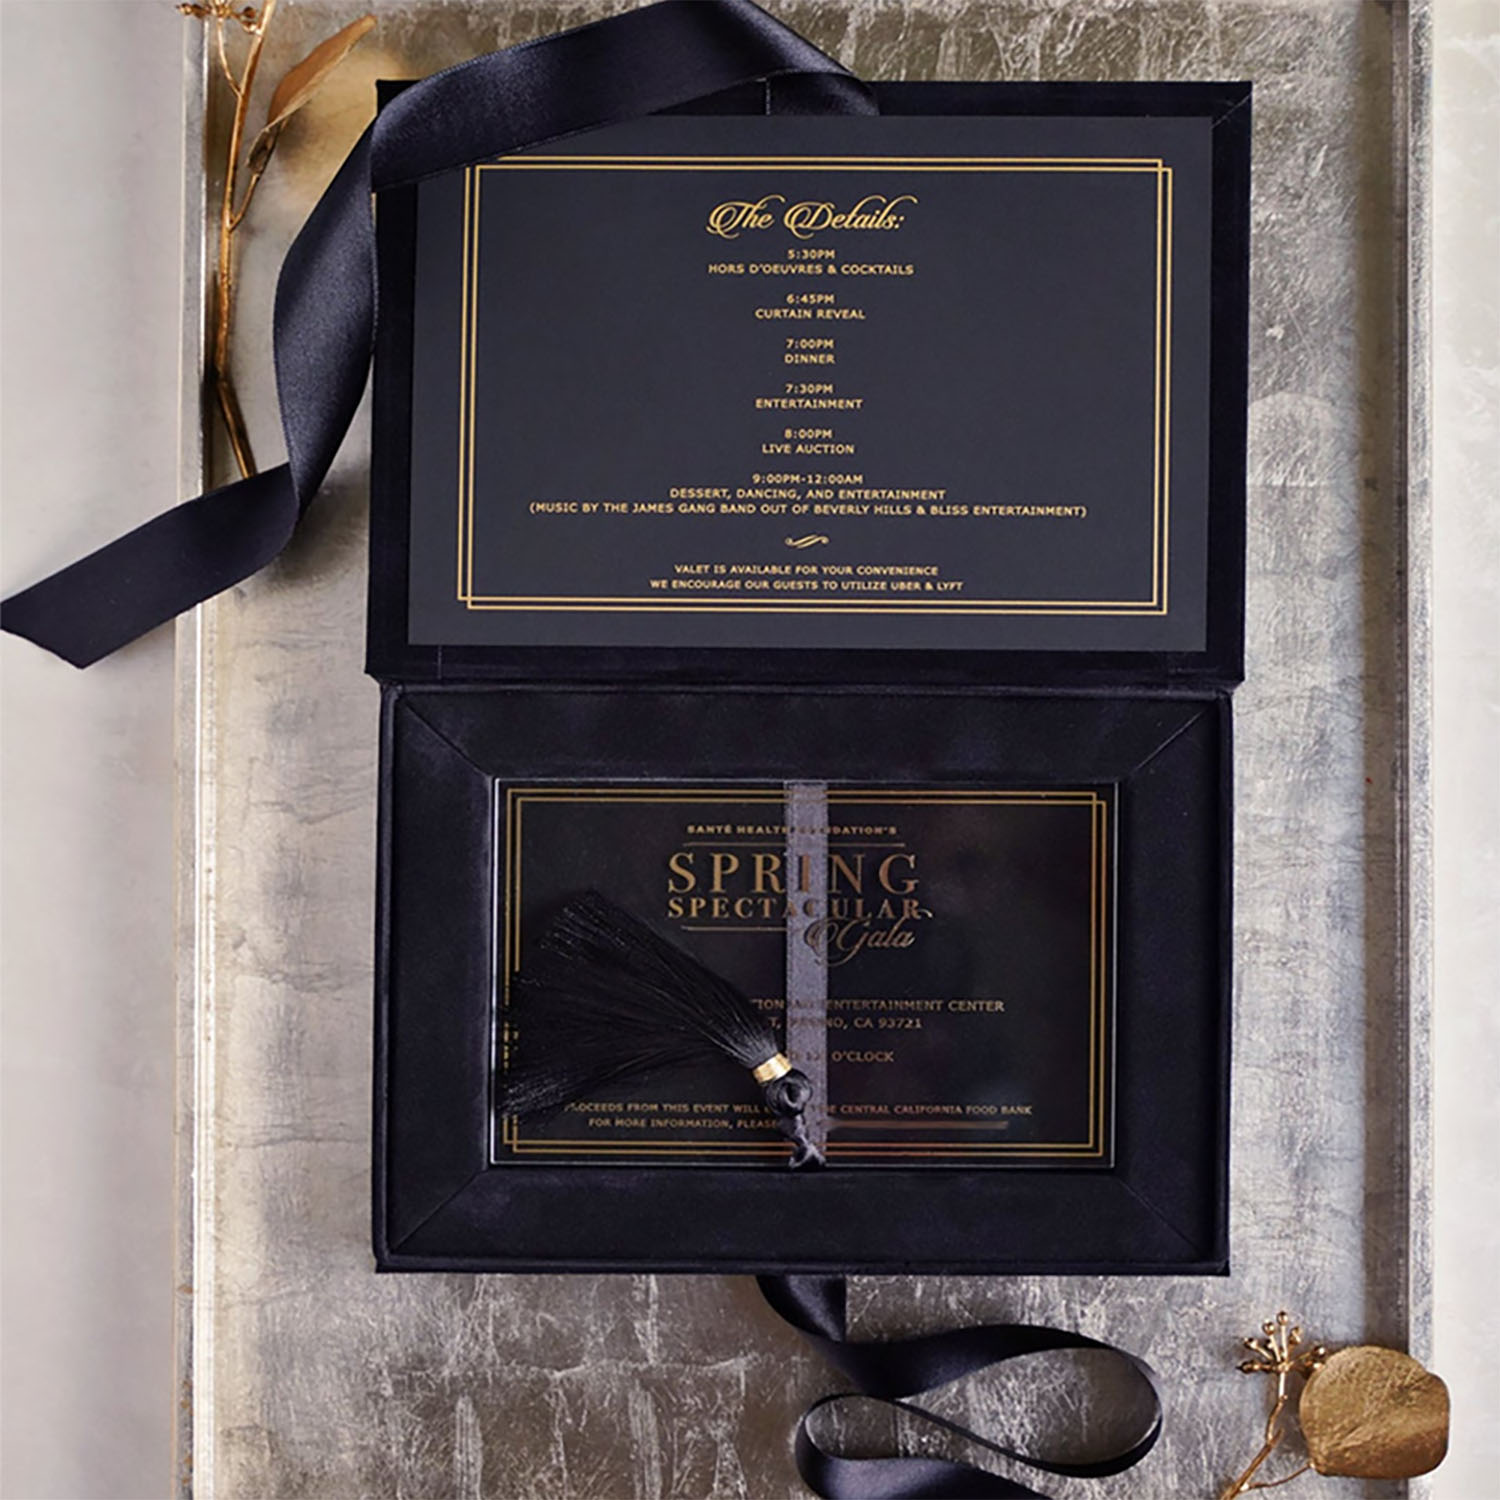 Custom Gold Foil Stamped Paper Jewelry Box - Luxury Wedding Invitations,  Handmade Invitations & Wedding Favors